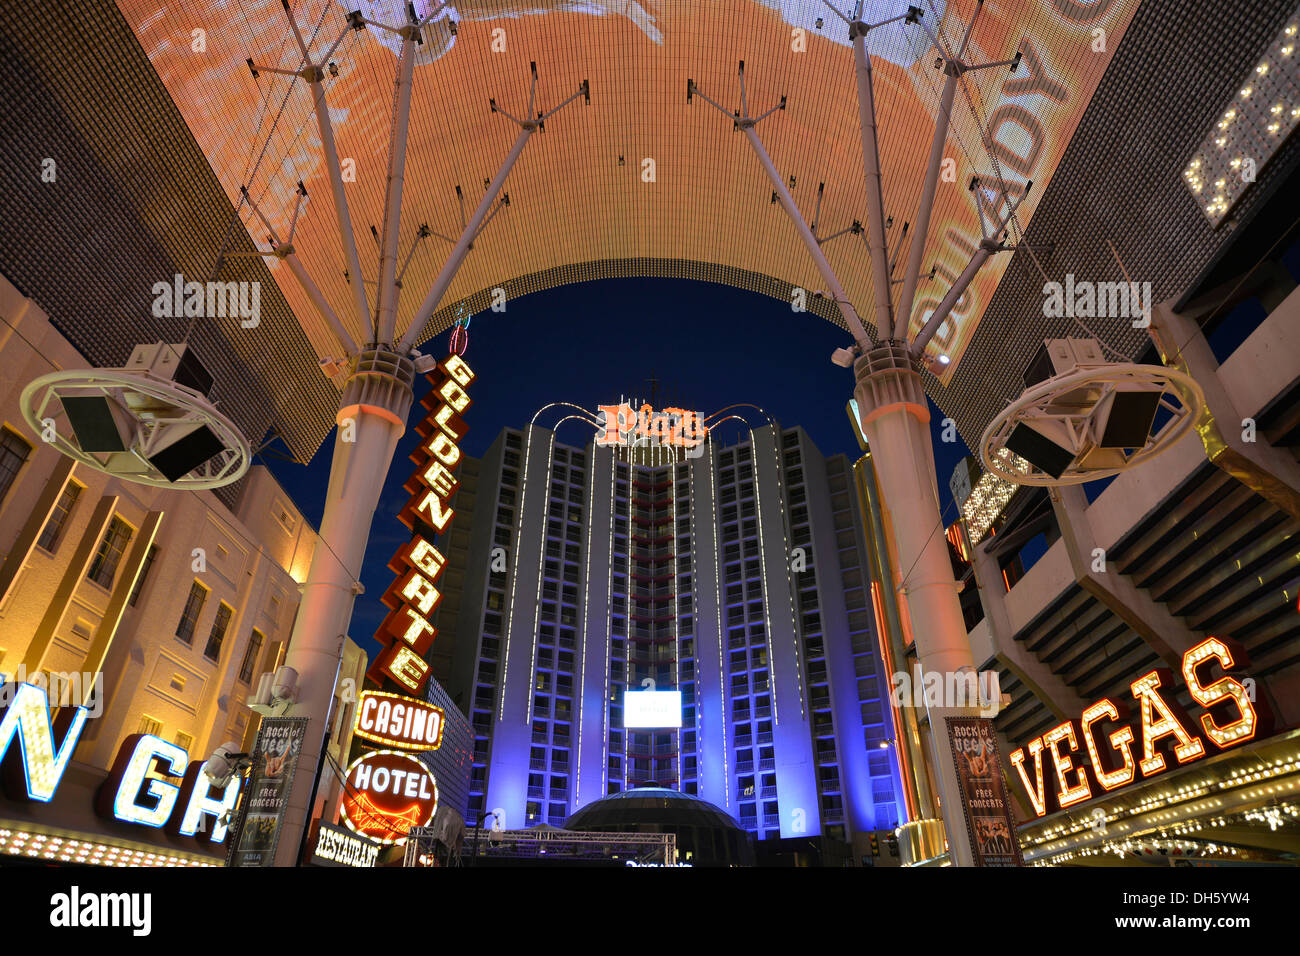 Plaza Casino Hotel, Vegas Club Casino, Fremont Street Experience in old Las Vegas, Downtown Las Vegas, Nevada Stock Photo